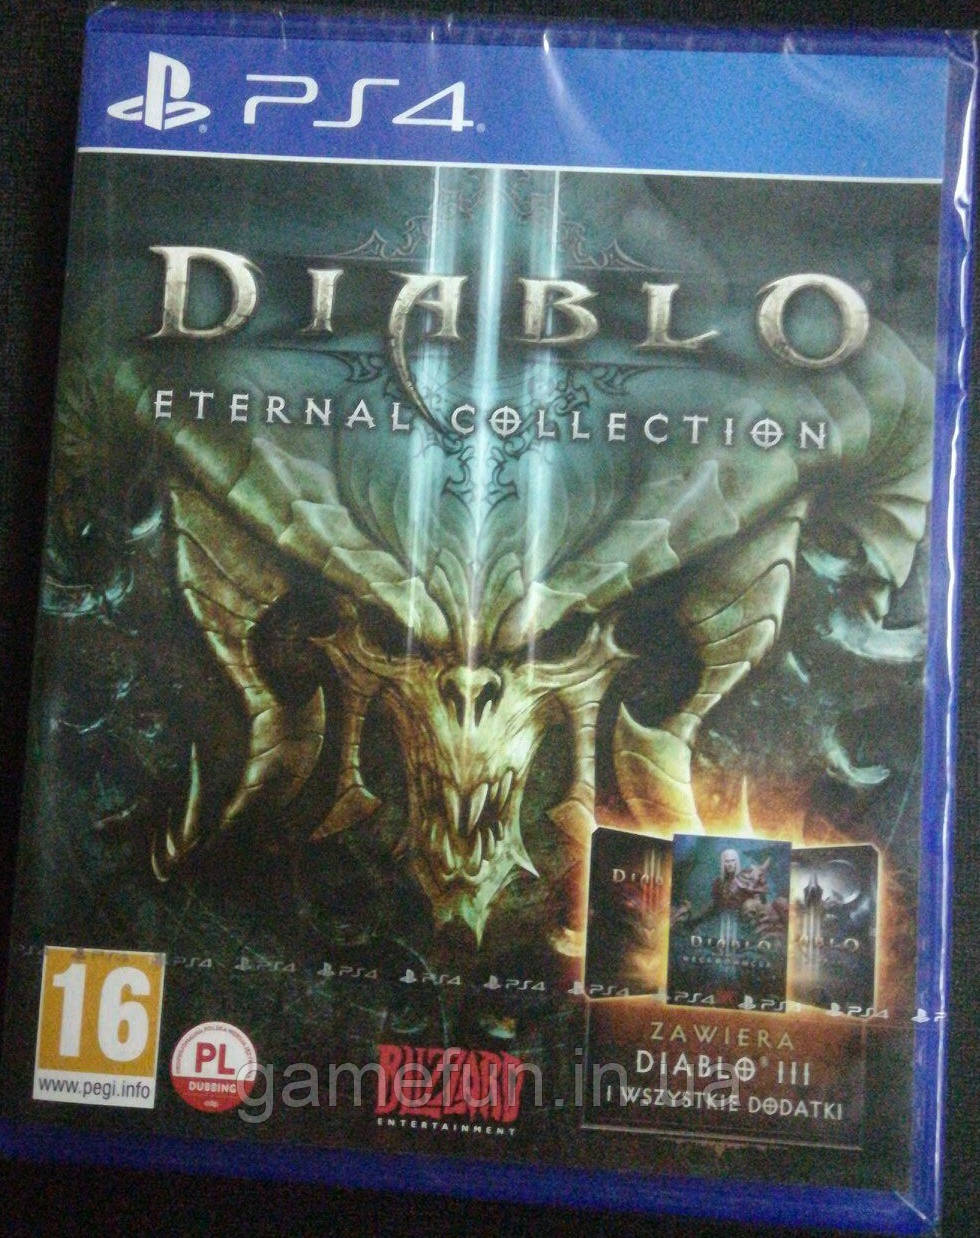 Diablo III Eternal Collection PS4 (русский язык), цена 890 грн., купить в  Черкассах — Prom.ua (ID#917409510)